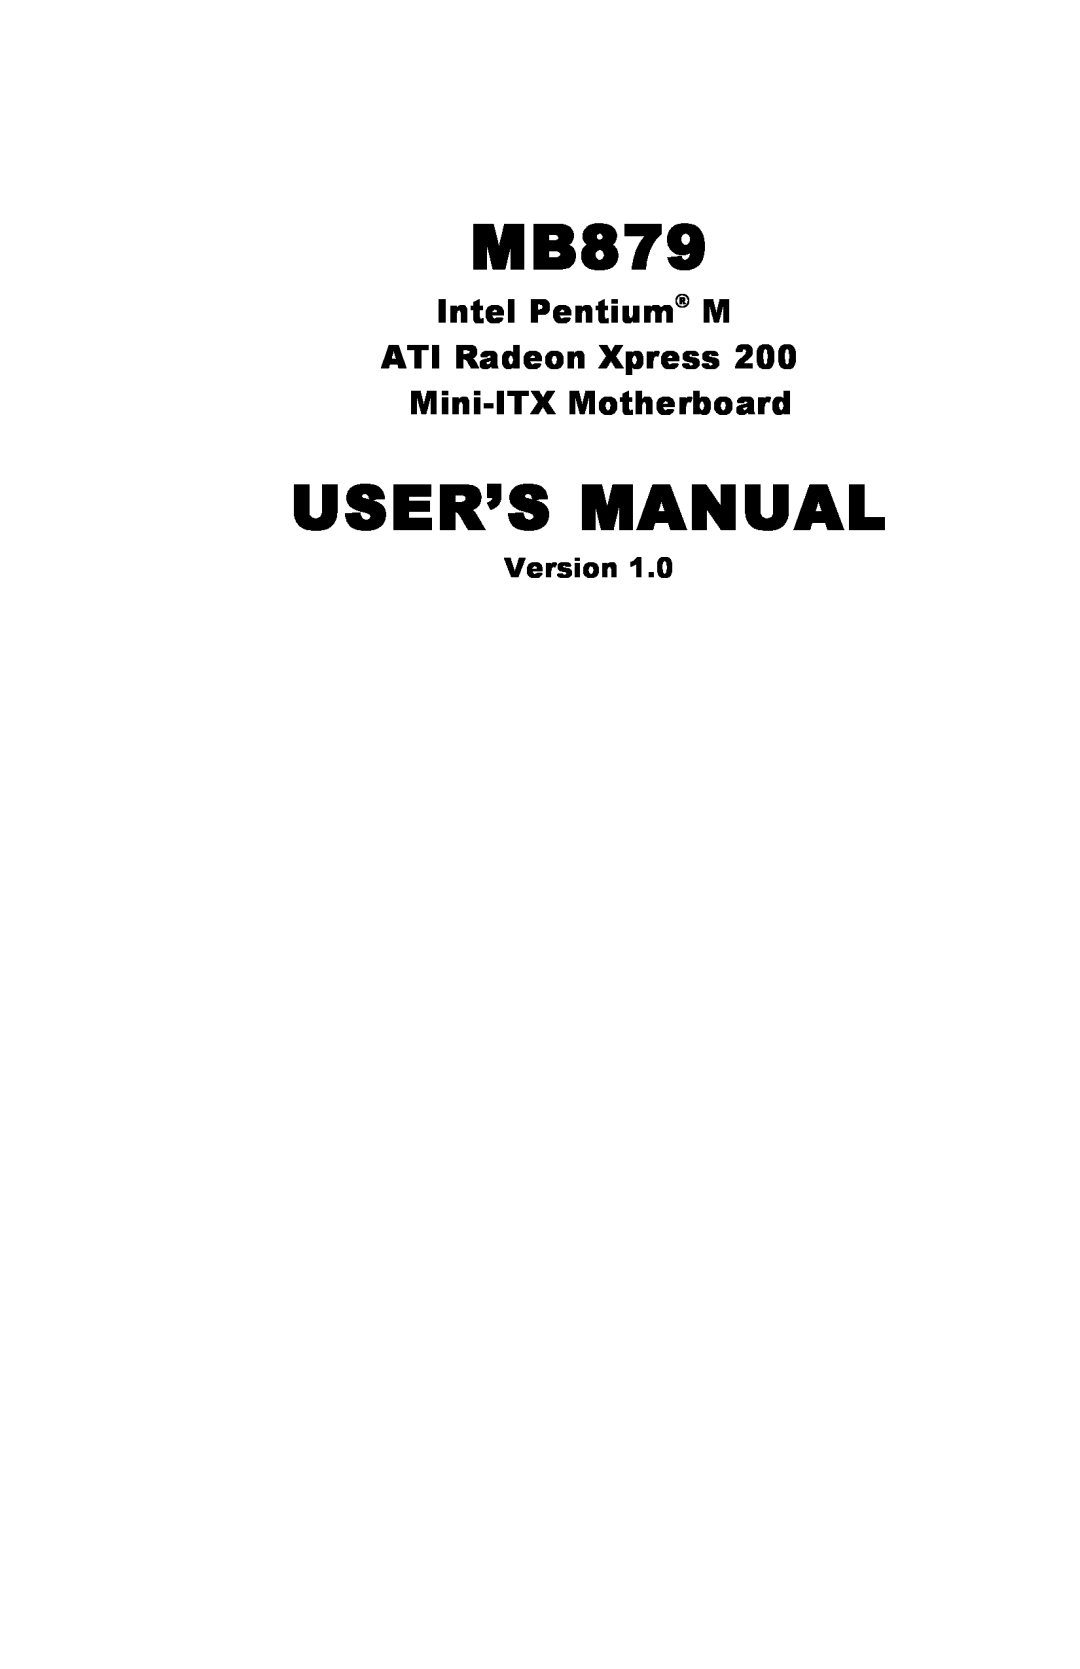 Intel MB879 user manual Intel Pentium M ATI Radeon Xpress Mini-ITX Motherboard, Version, User’S Manual 